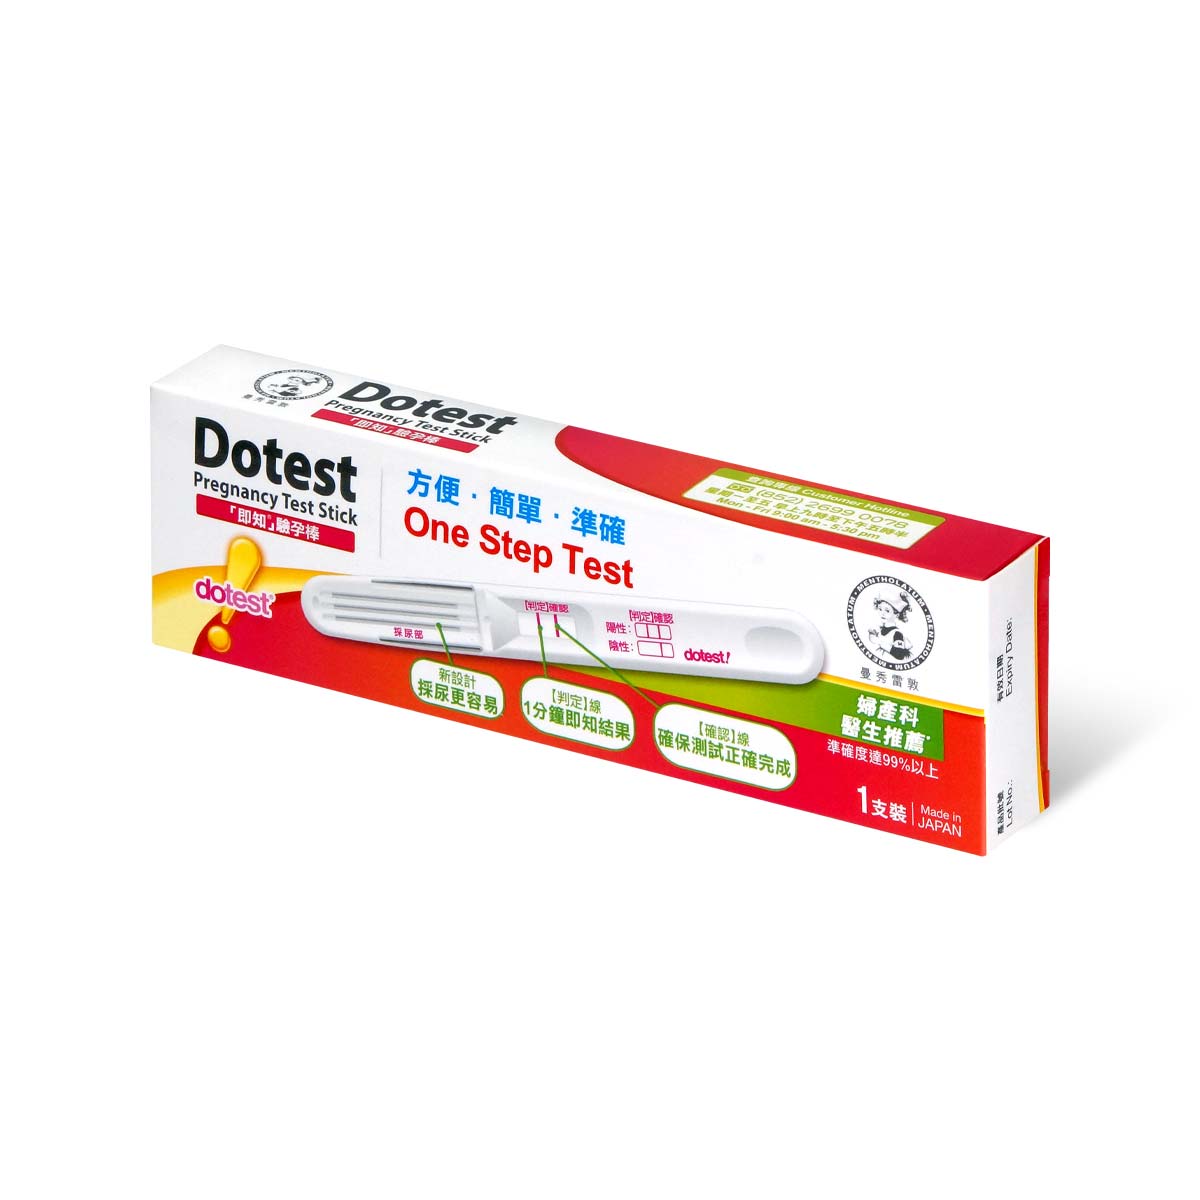 Mentholatum dotest One Step Pregnancy Test Stick-p_1